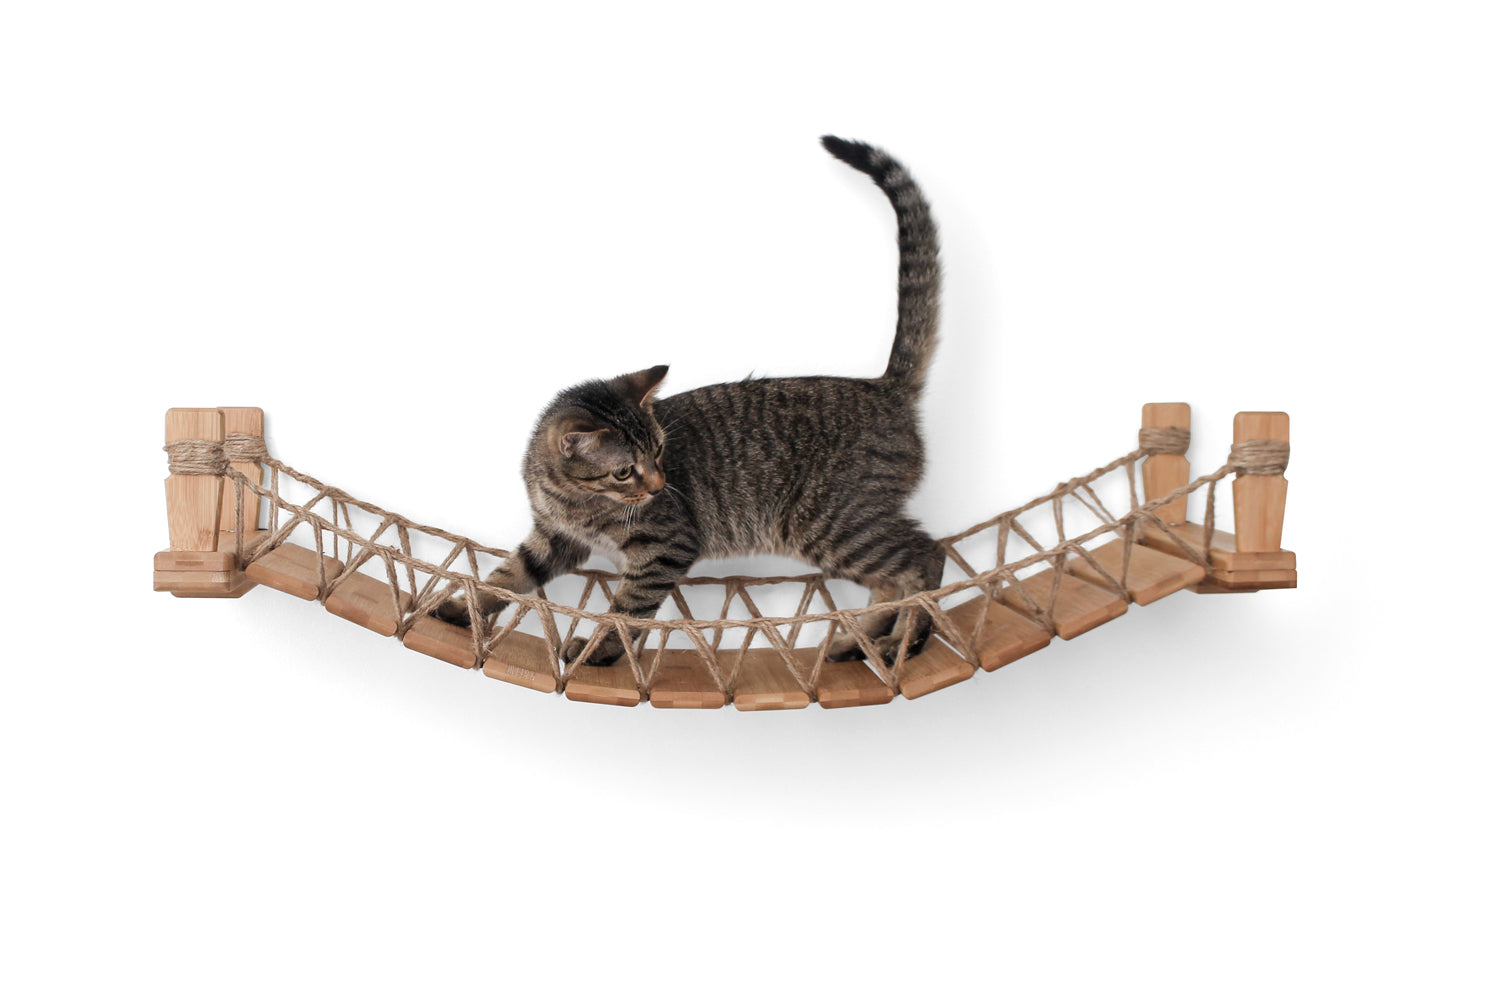 Kitten playing on bridge. Bridge shown is Natural/Twine.